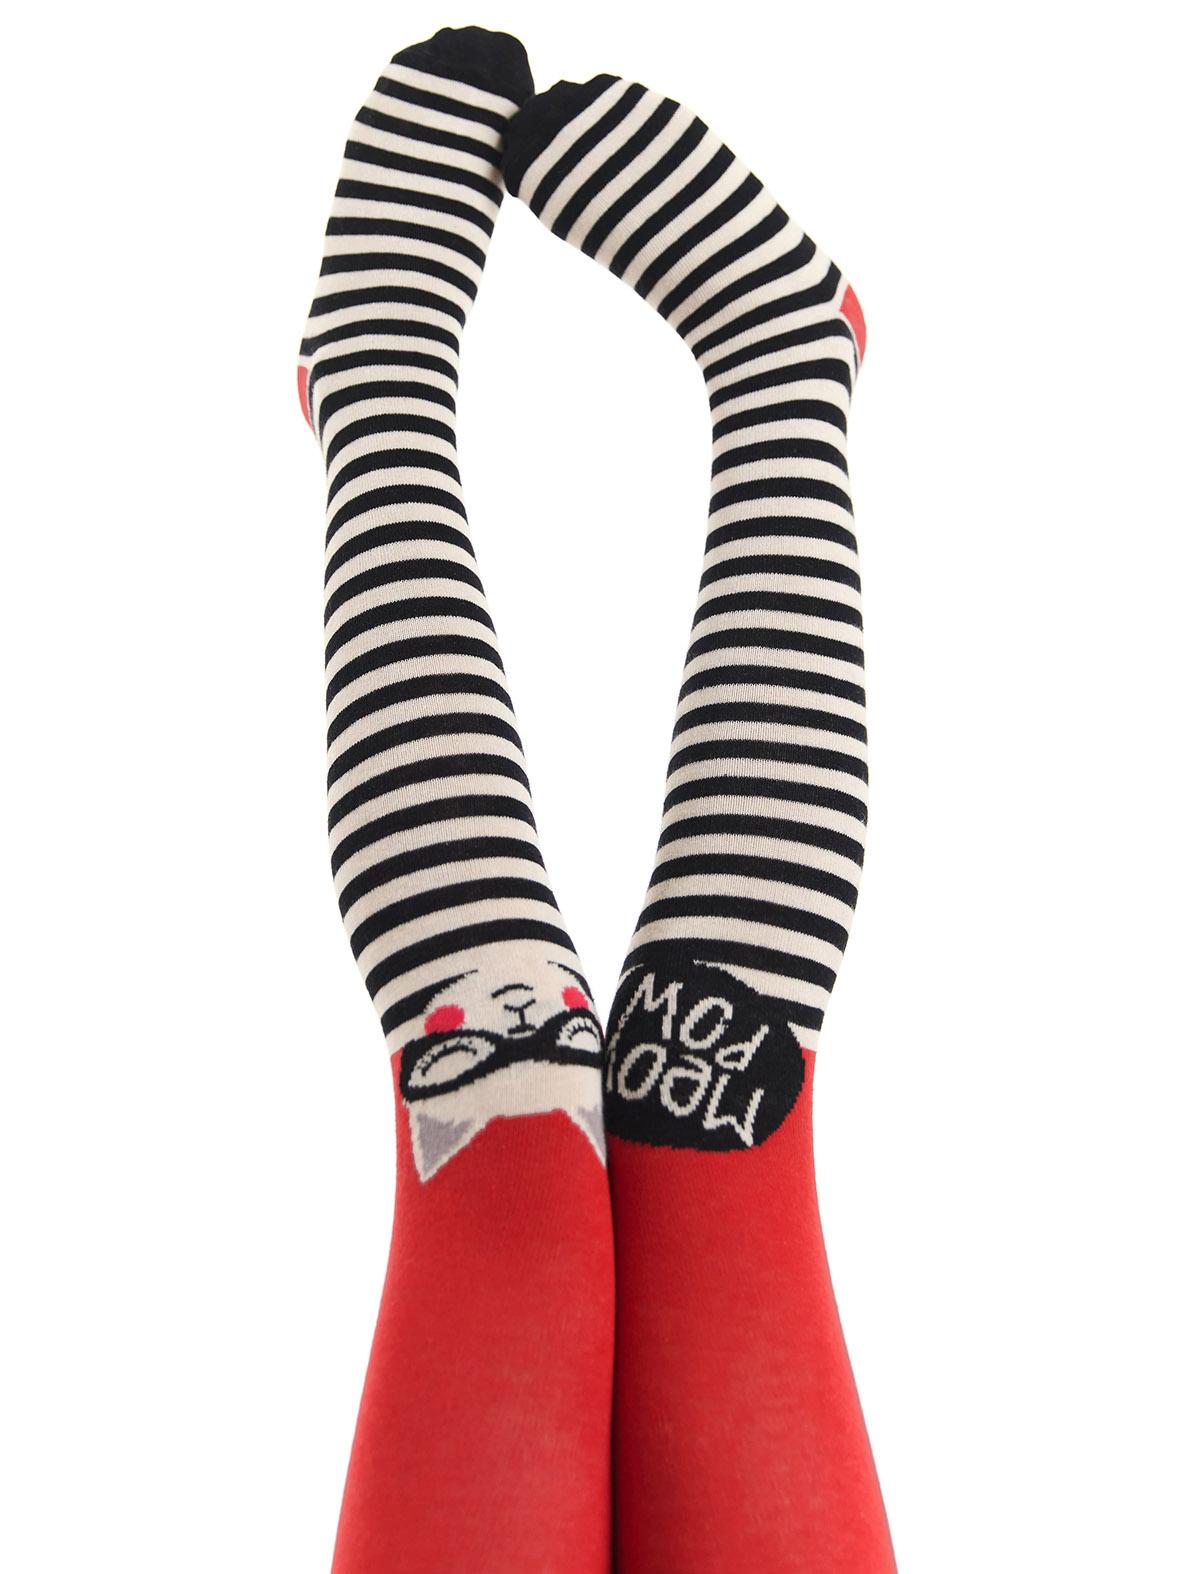 Meow Pow Kız Çocuk Külotlu Çorap